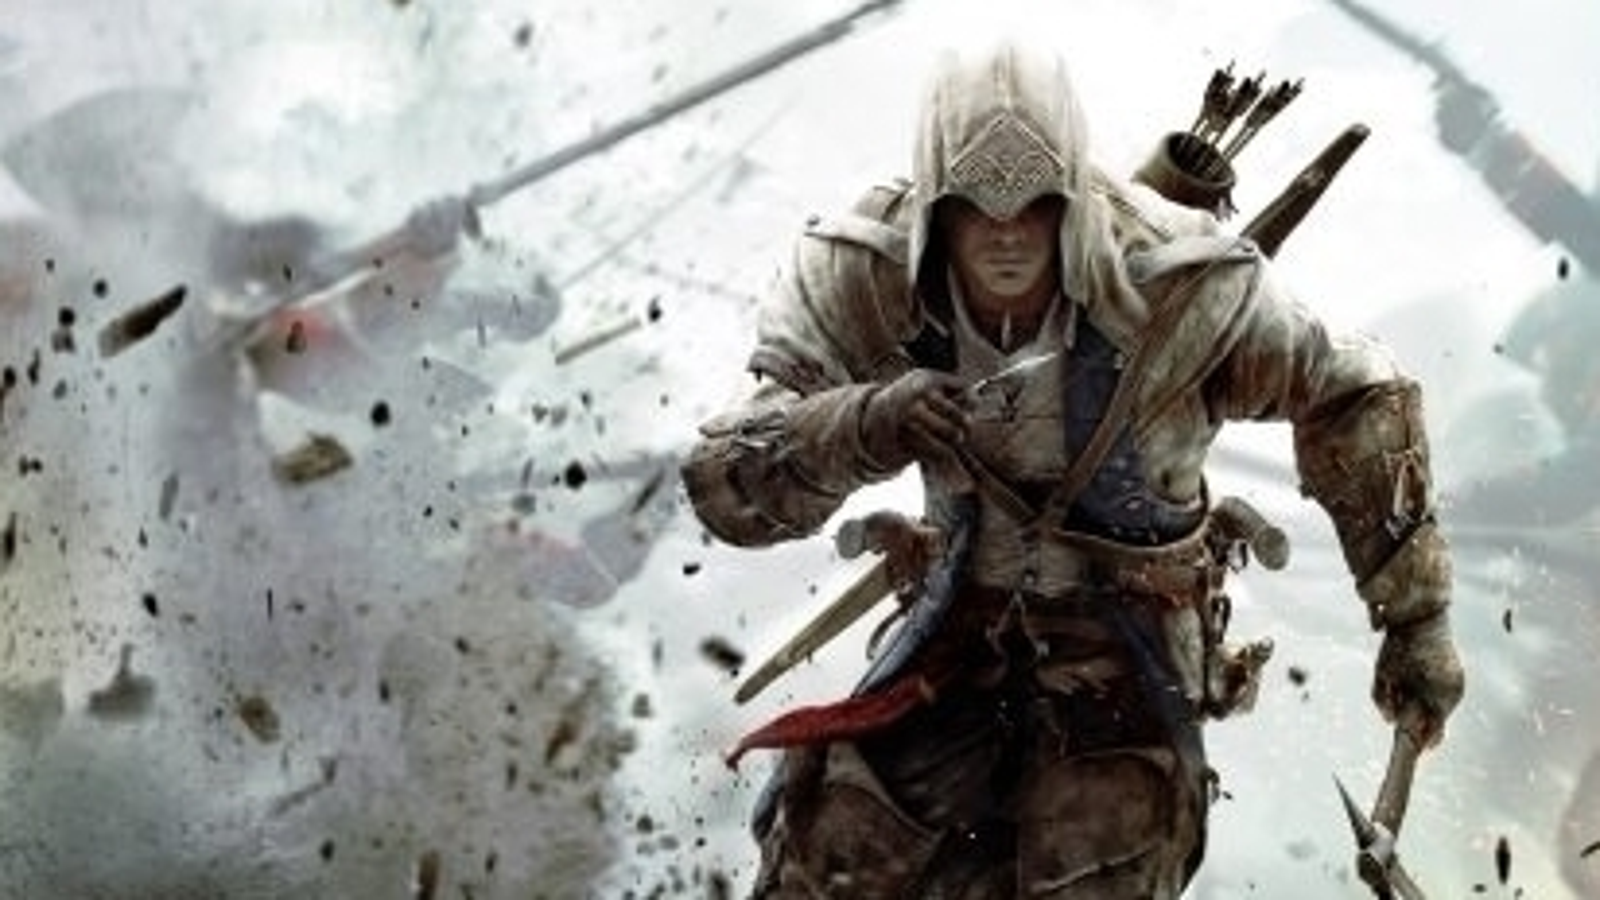 Pega essa Análise! Assassin's Creed III Remastered 